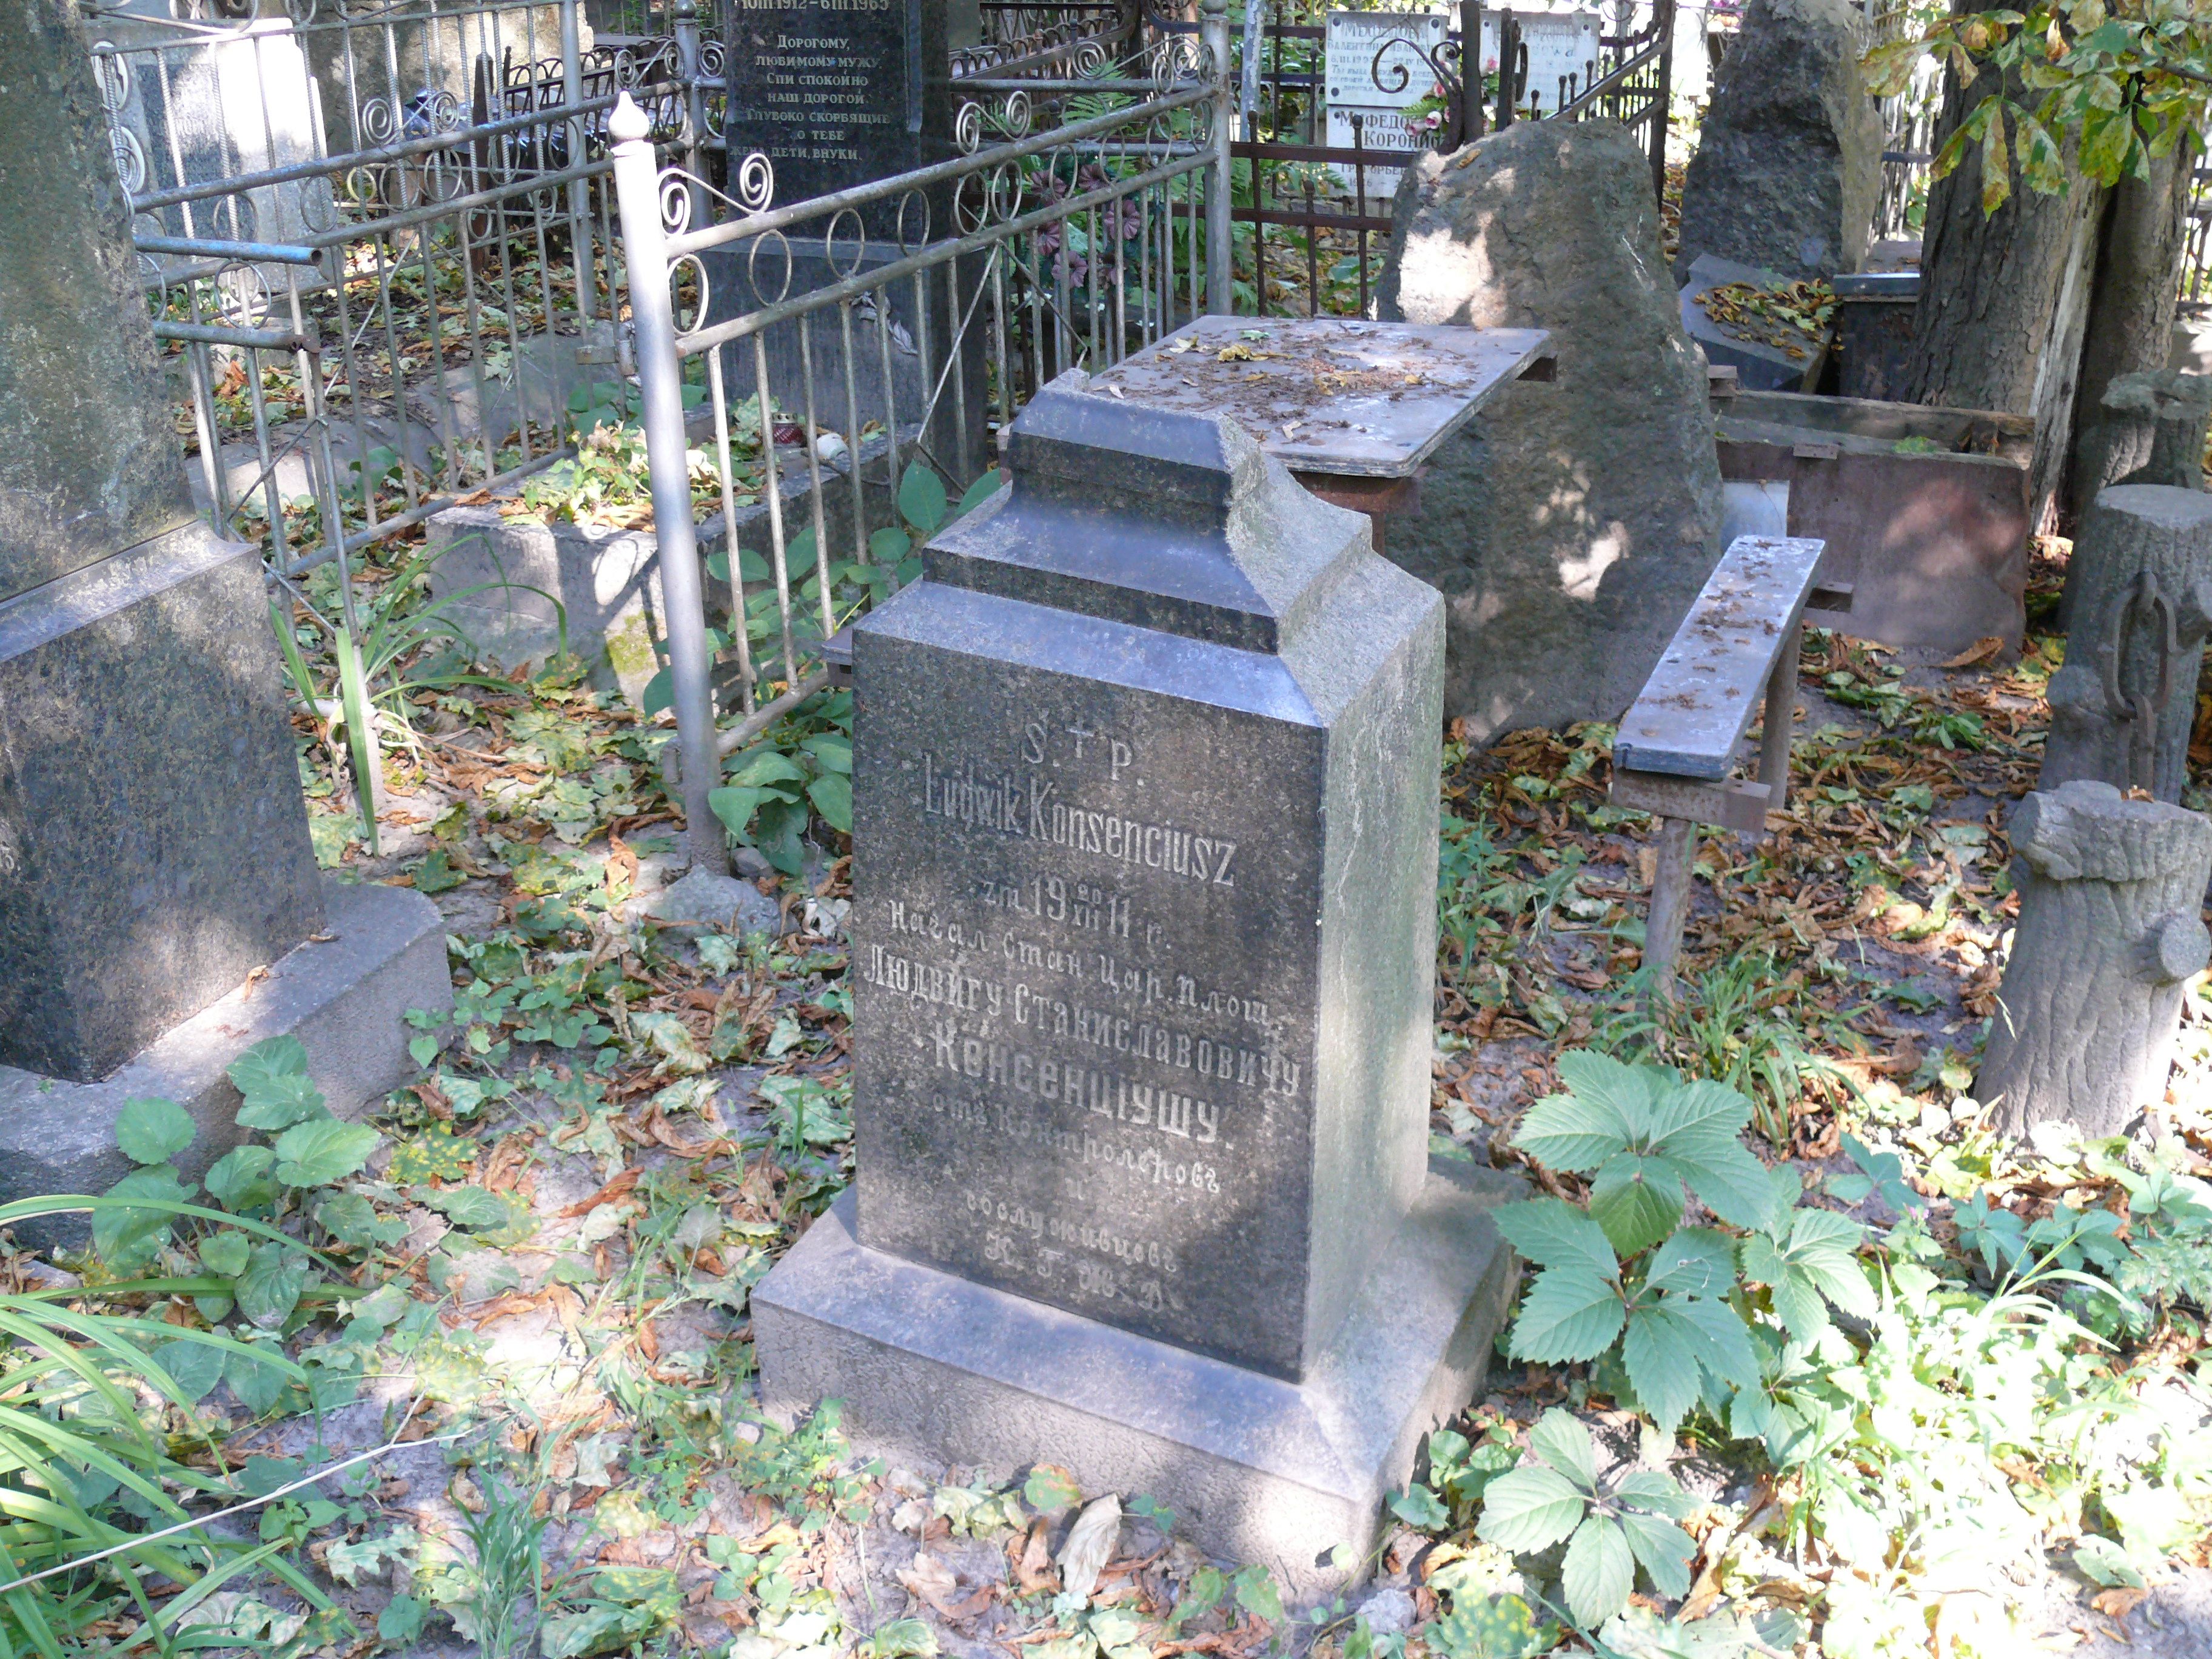 Tombstone of Louis Consort